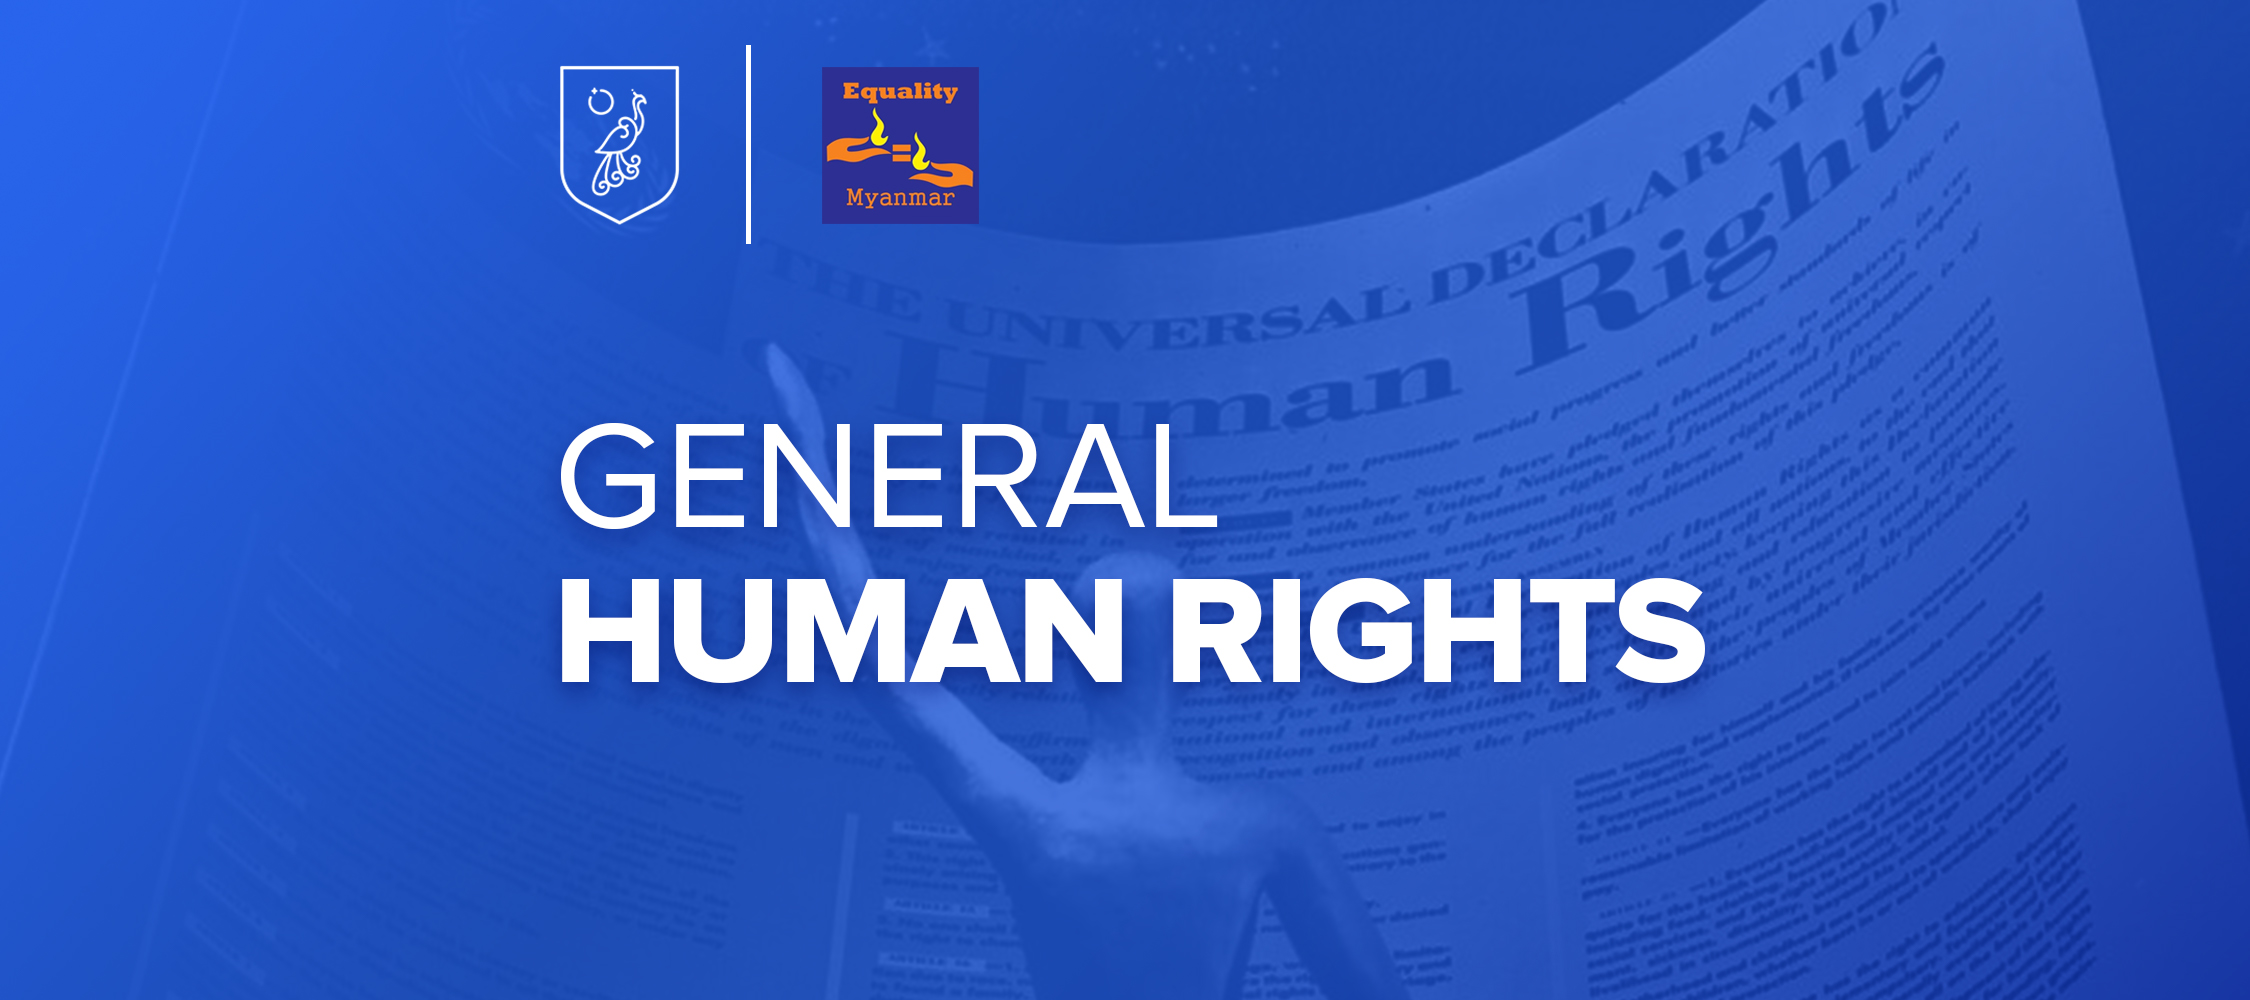 General Human Rights EQMM001